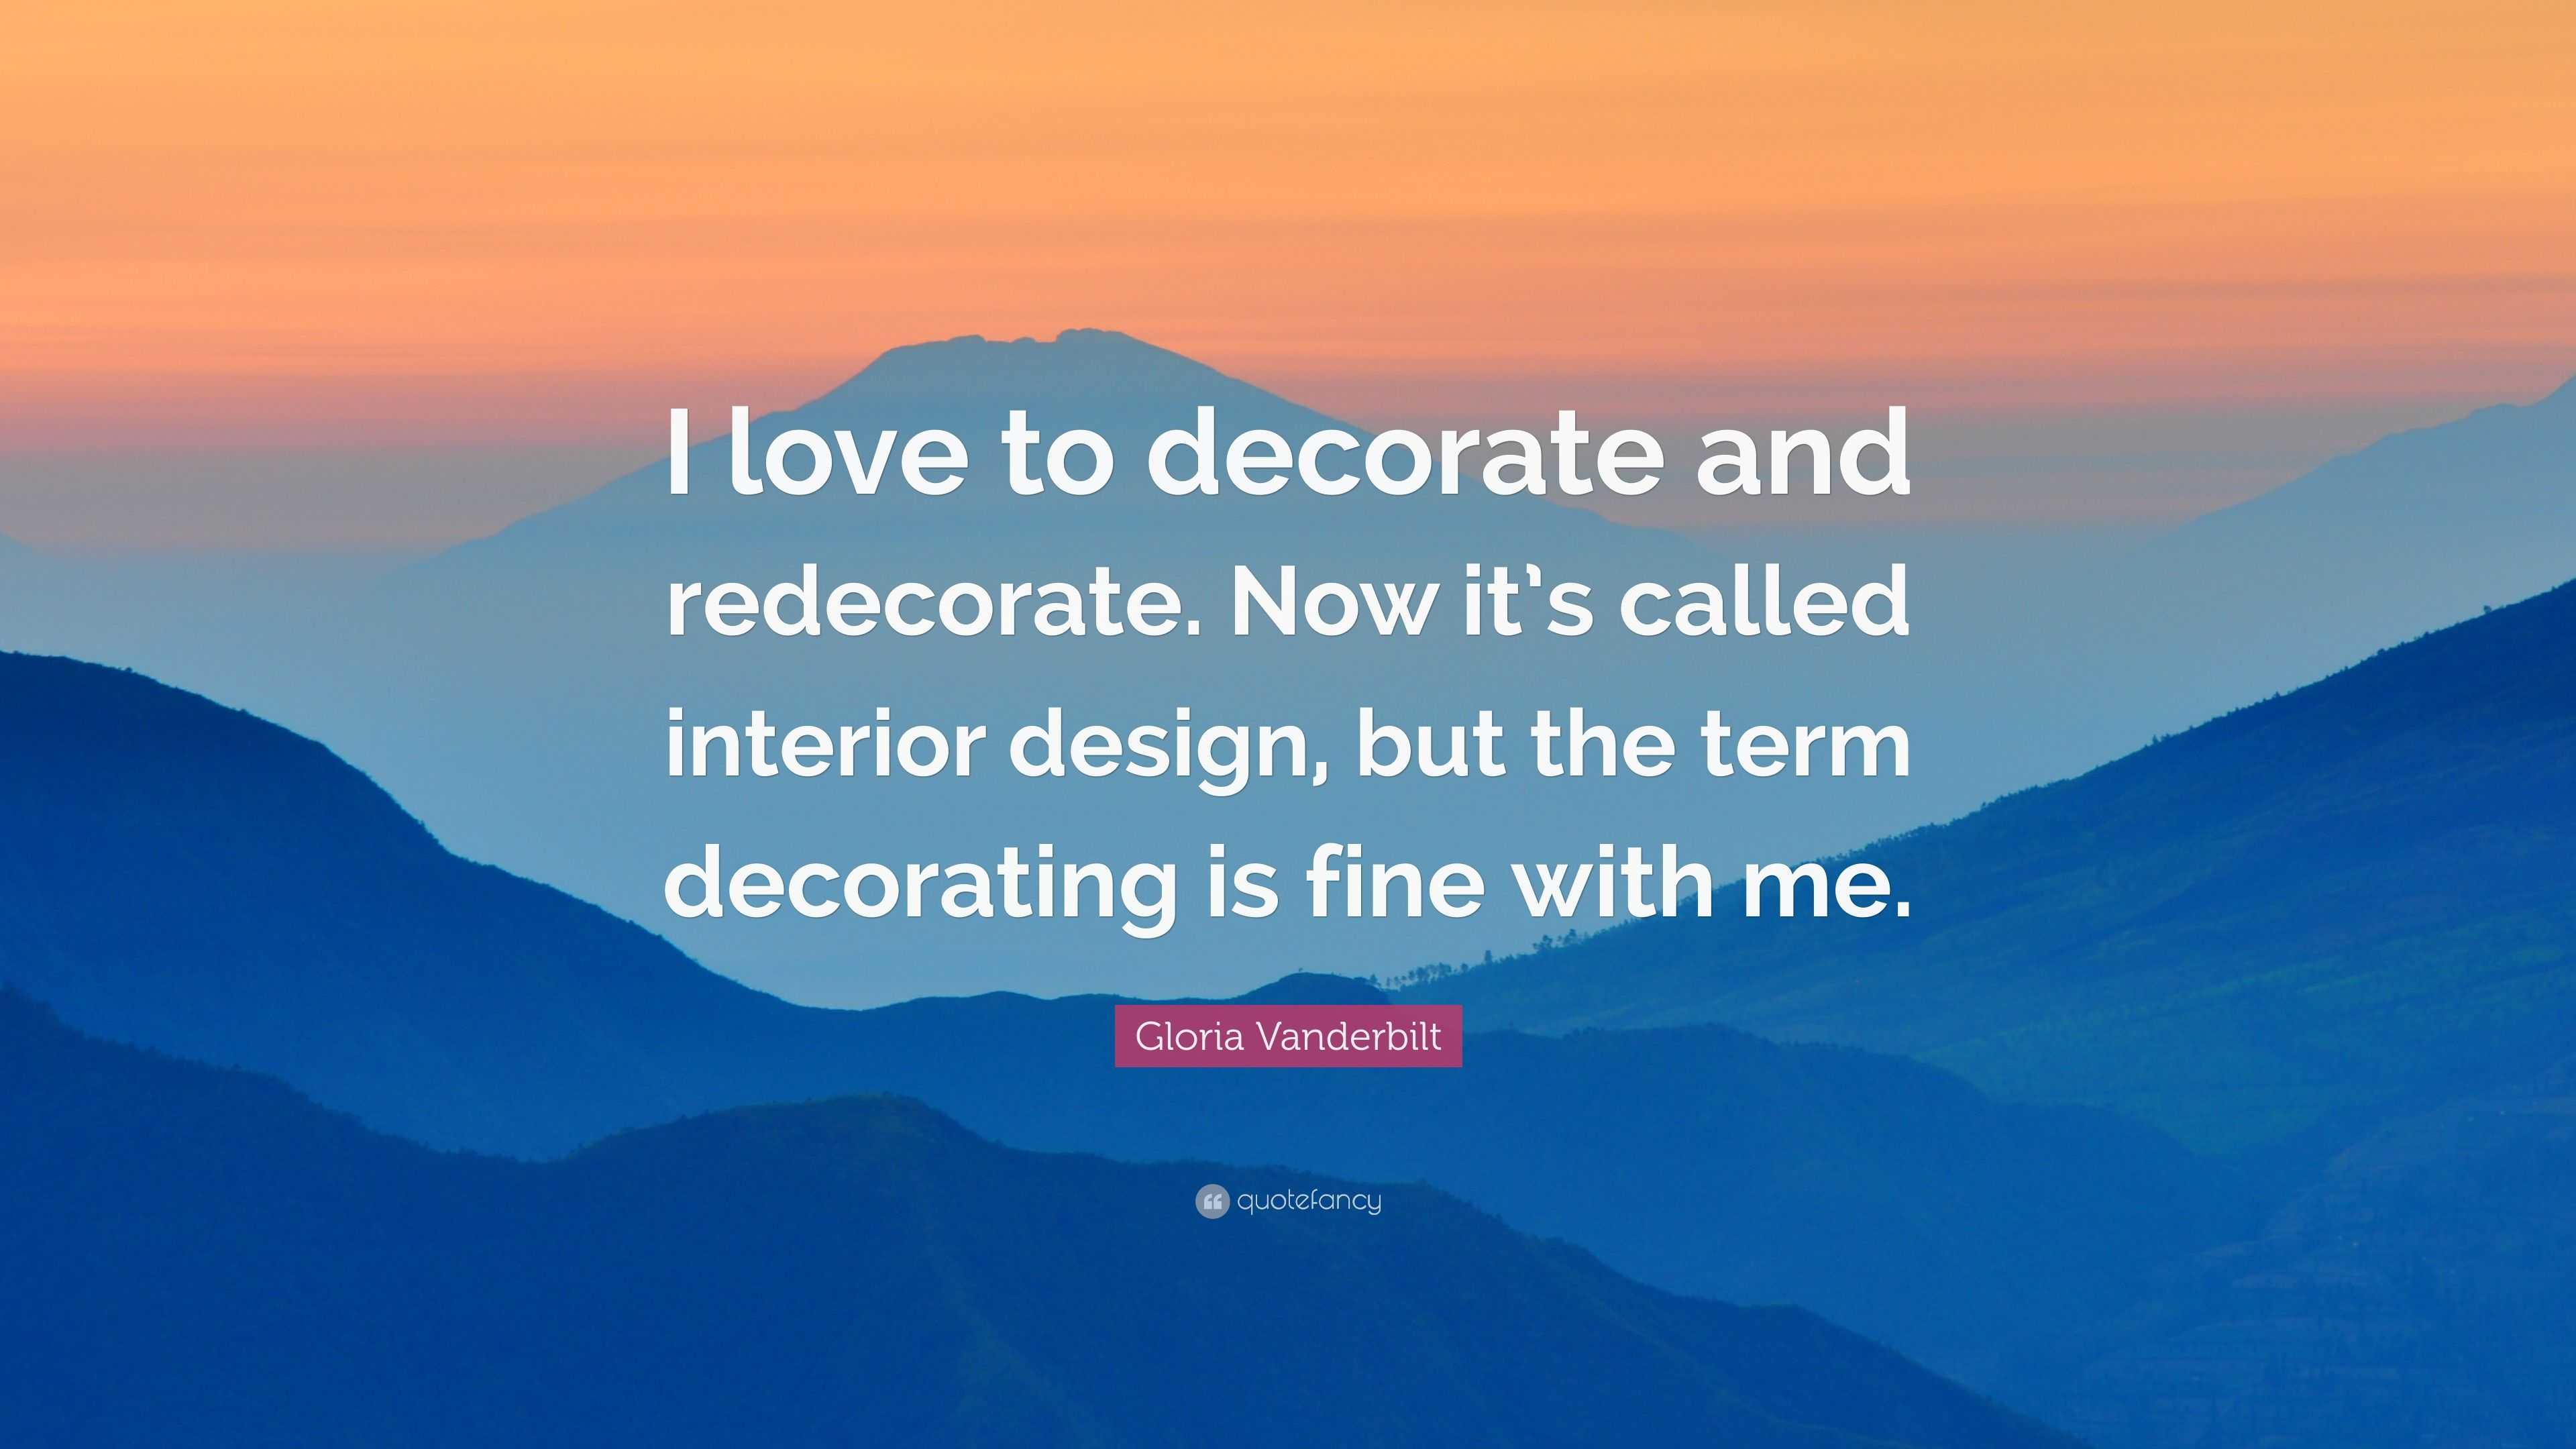 Gloria Vanderbilt Quote: “I love to decorate and redecorate. Now it’s ...